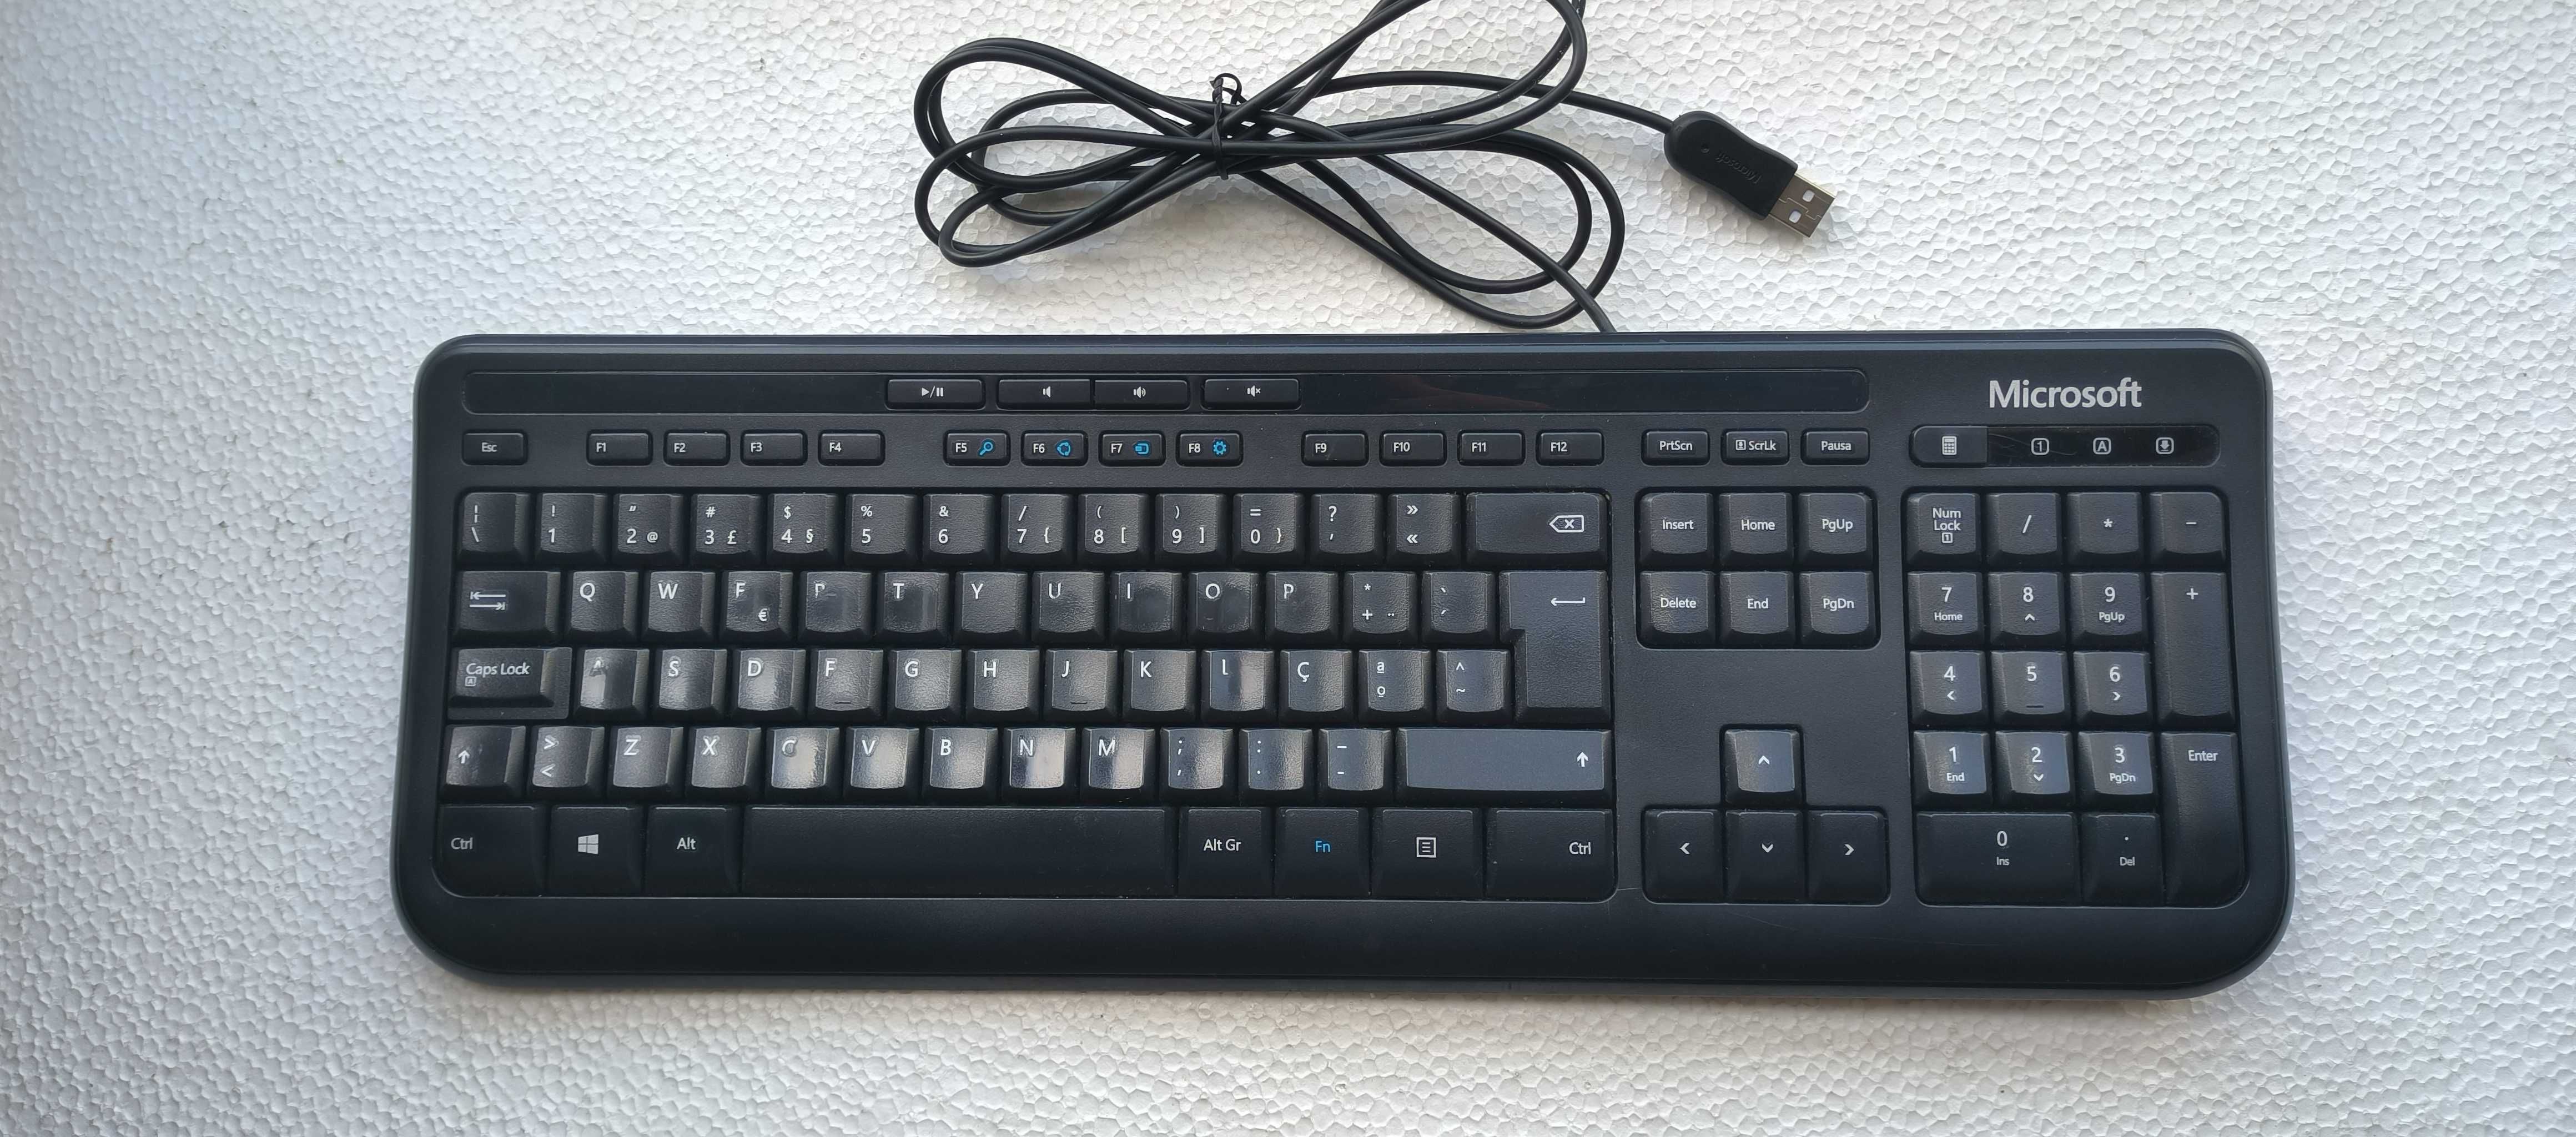 Teclado Microsoft Wired Keyboard 600: Confiabilidade para Uso Diário